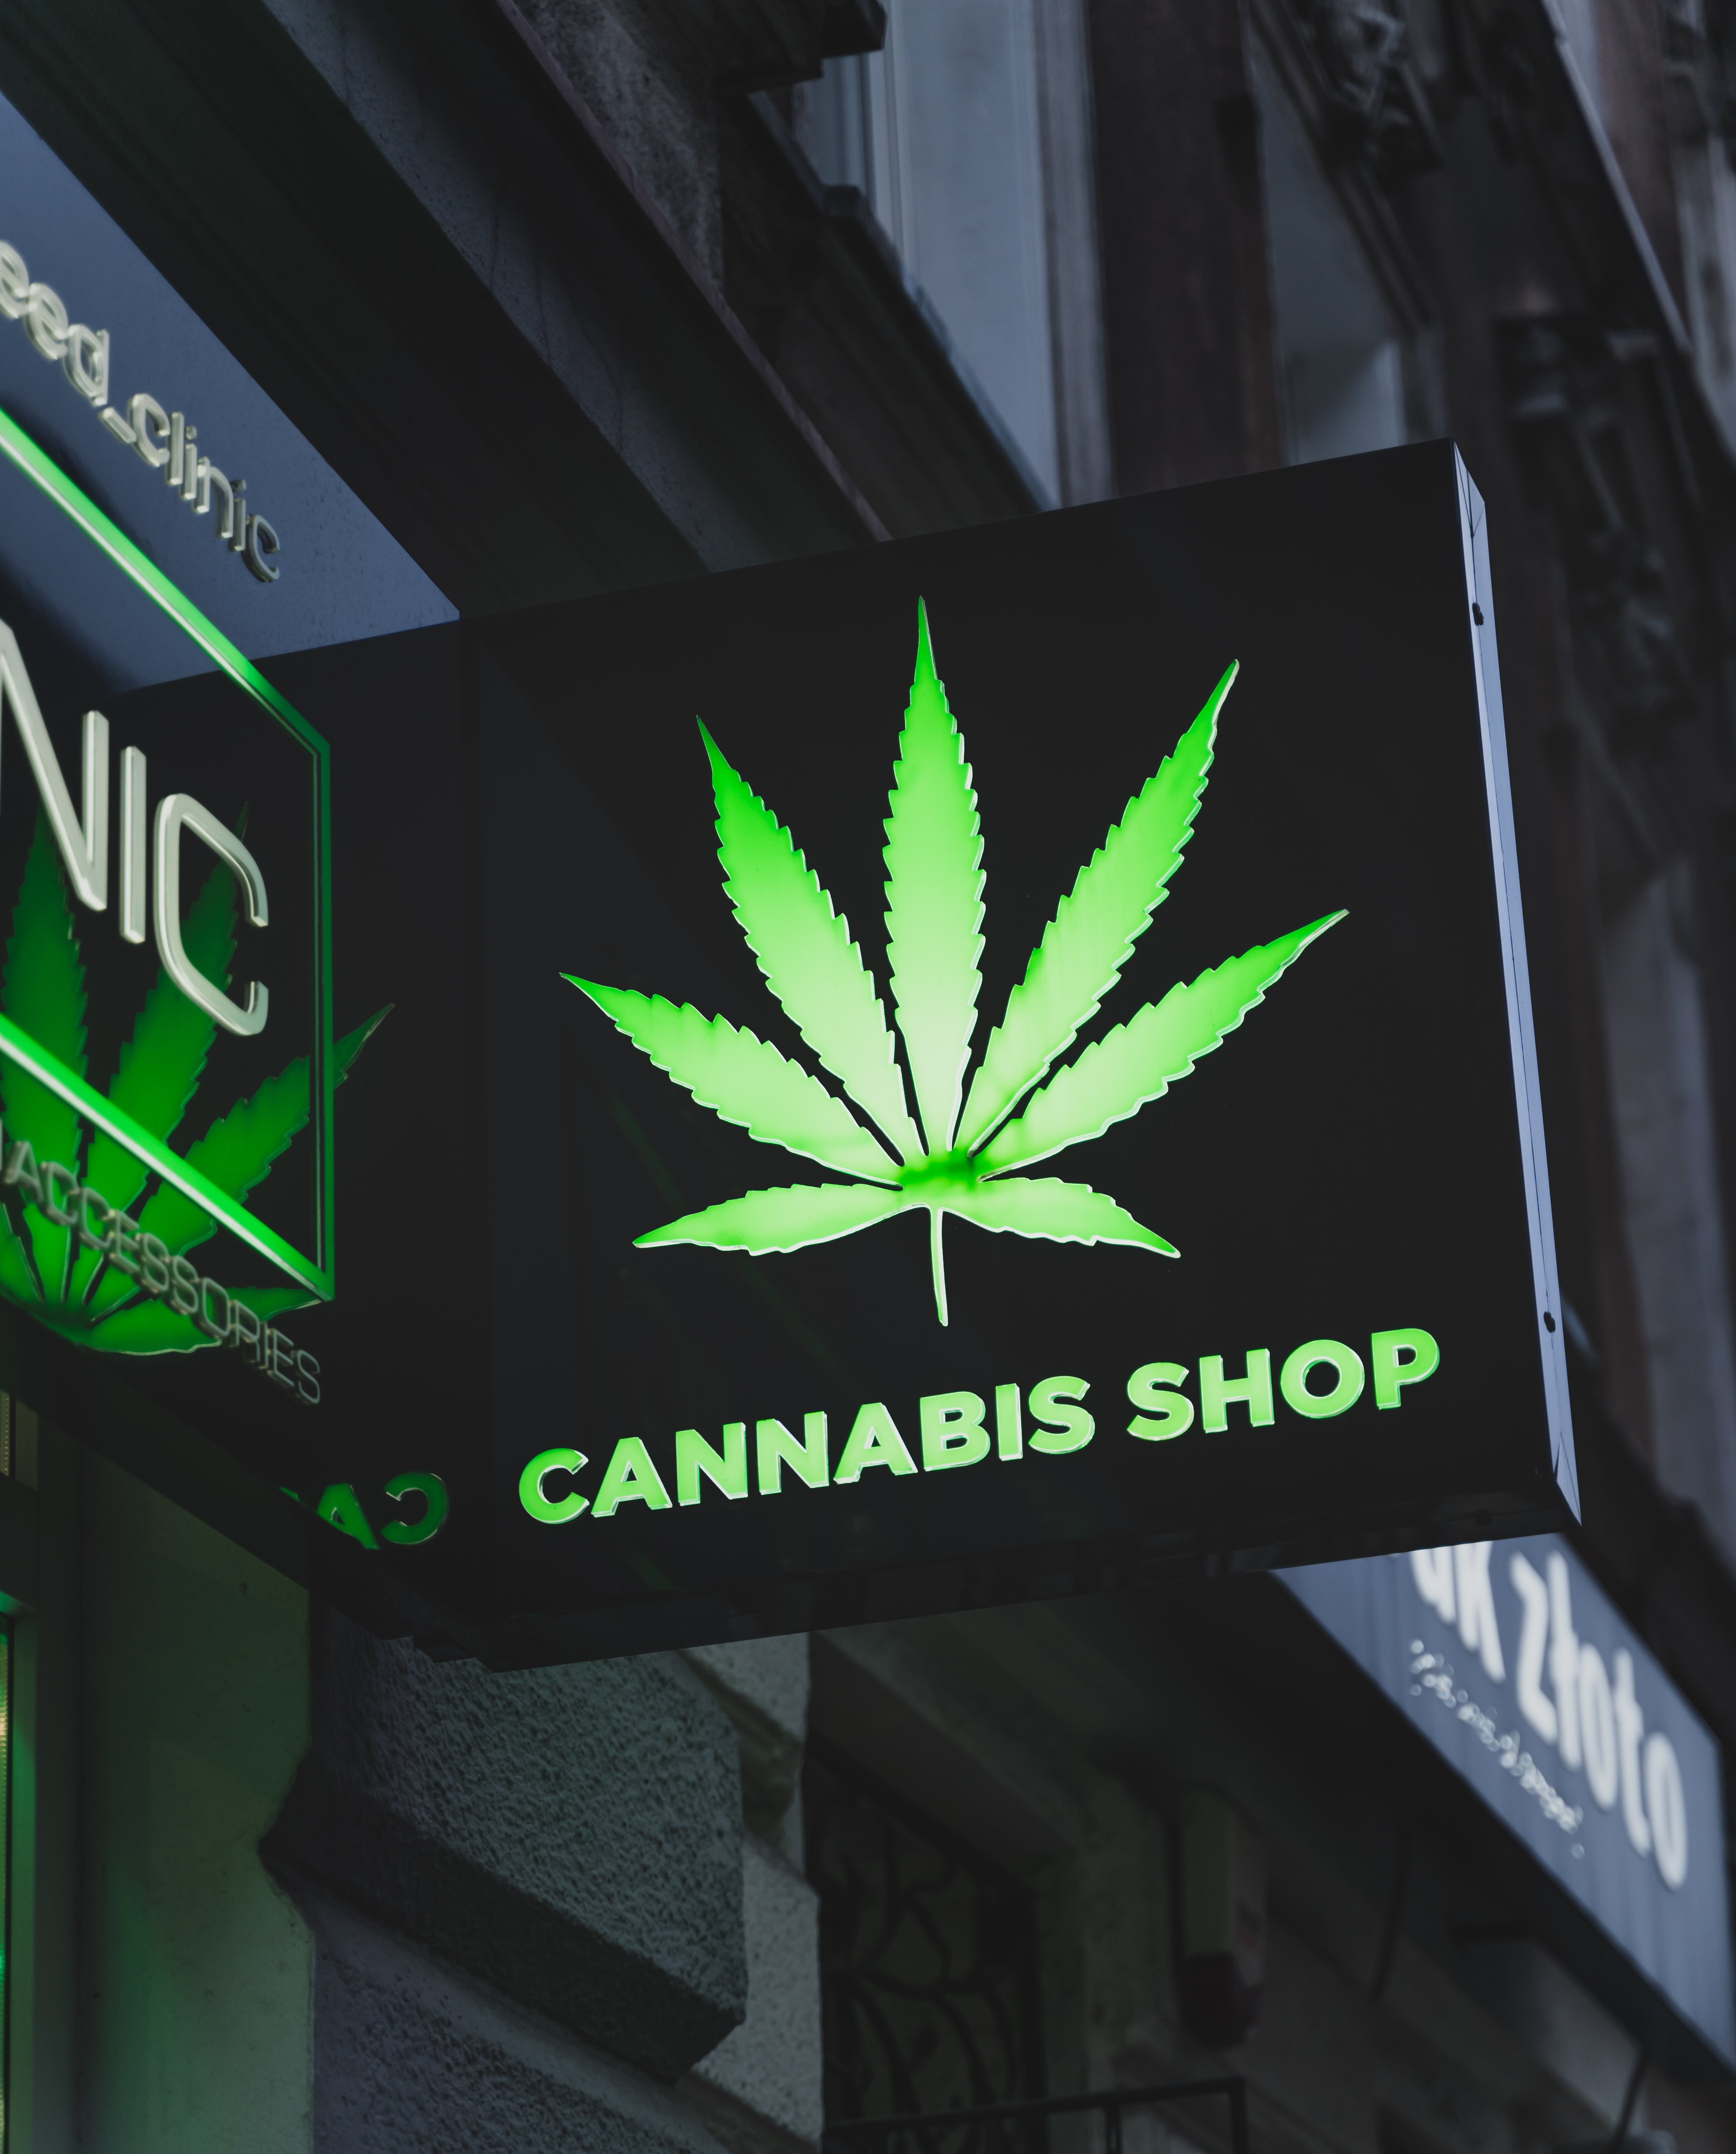 Cannabis Shop | Damian Barczak on Unsplash